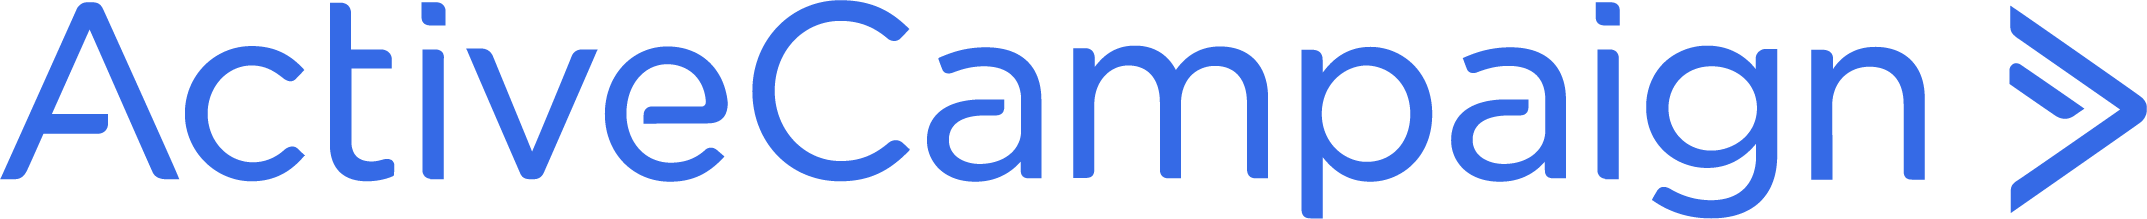 ac_logo-blue-trans